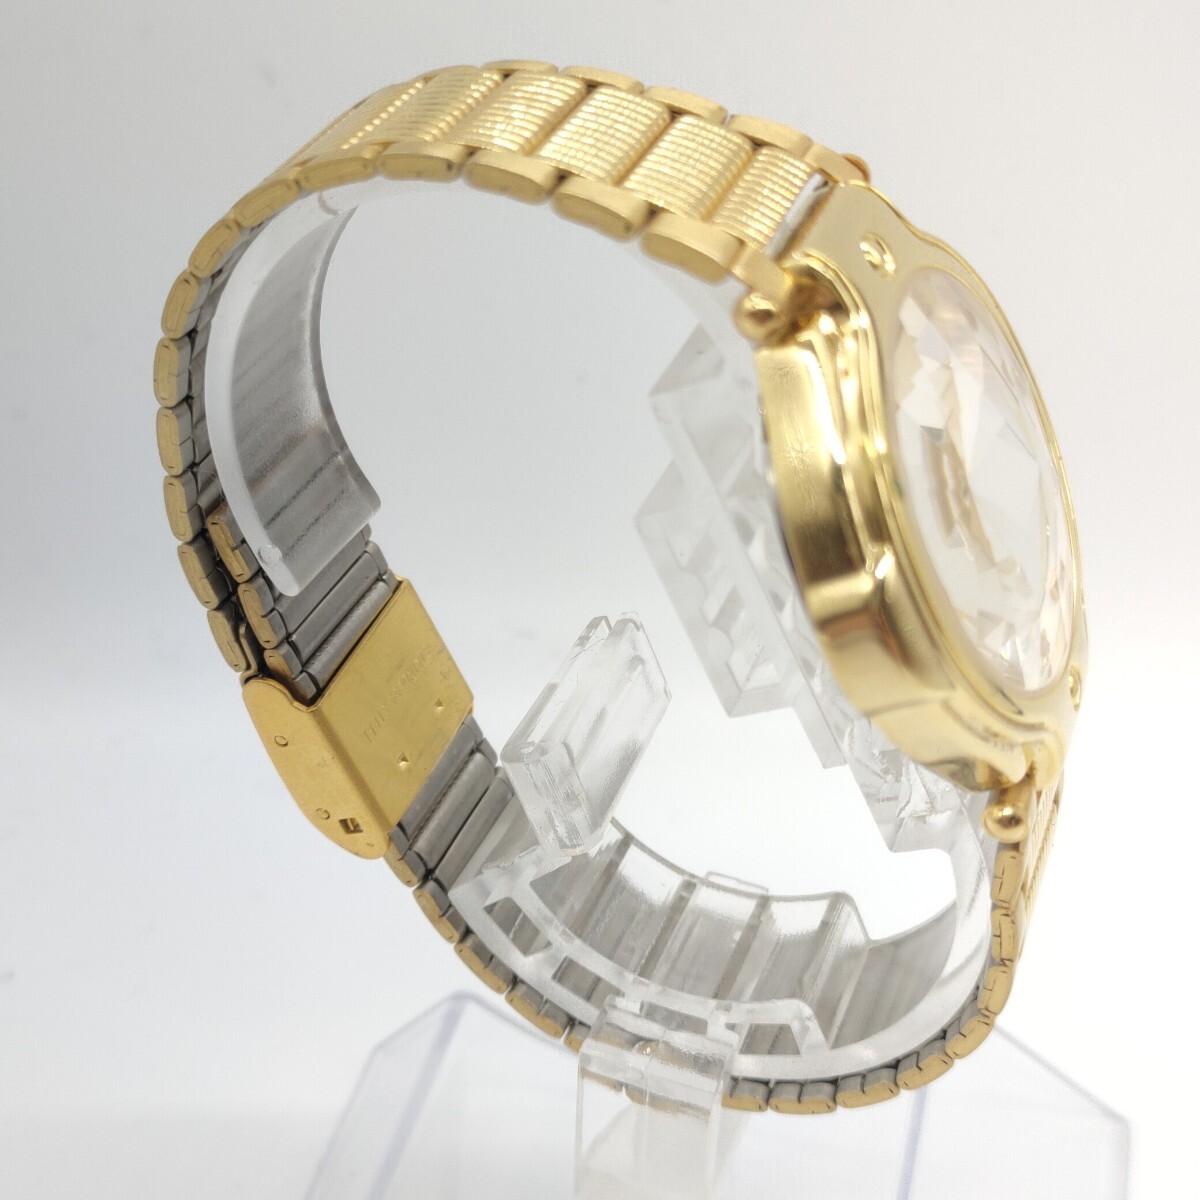 117 klaeuse レディース 腕時計 時計 クロイゼ SK-217-LO クオーツ クォーツ QUARTZ ゴールド ストーン 3針 アナログ シェル文字盤 SCHの画像4